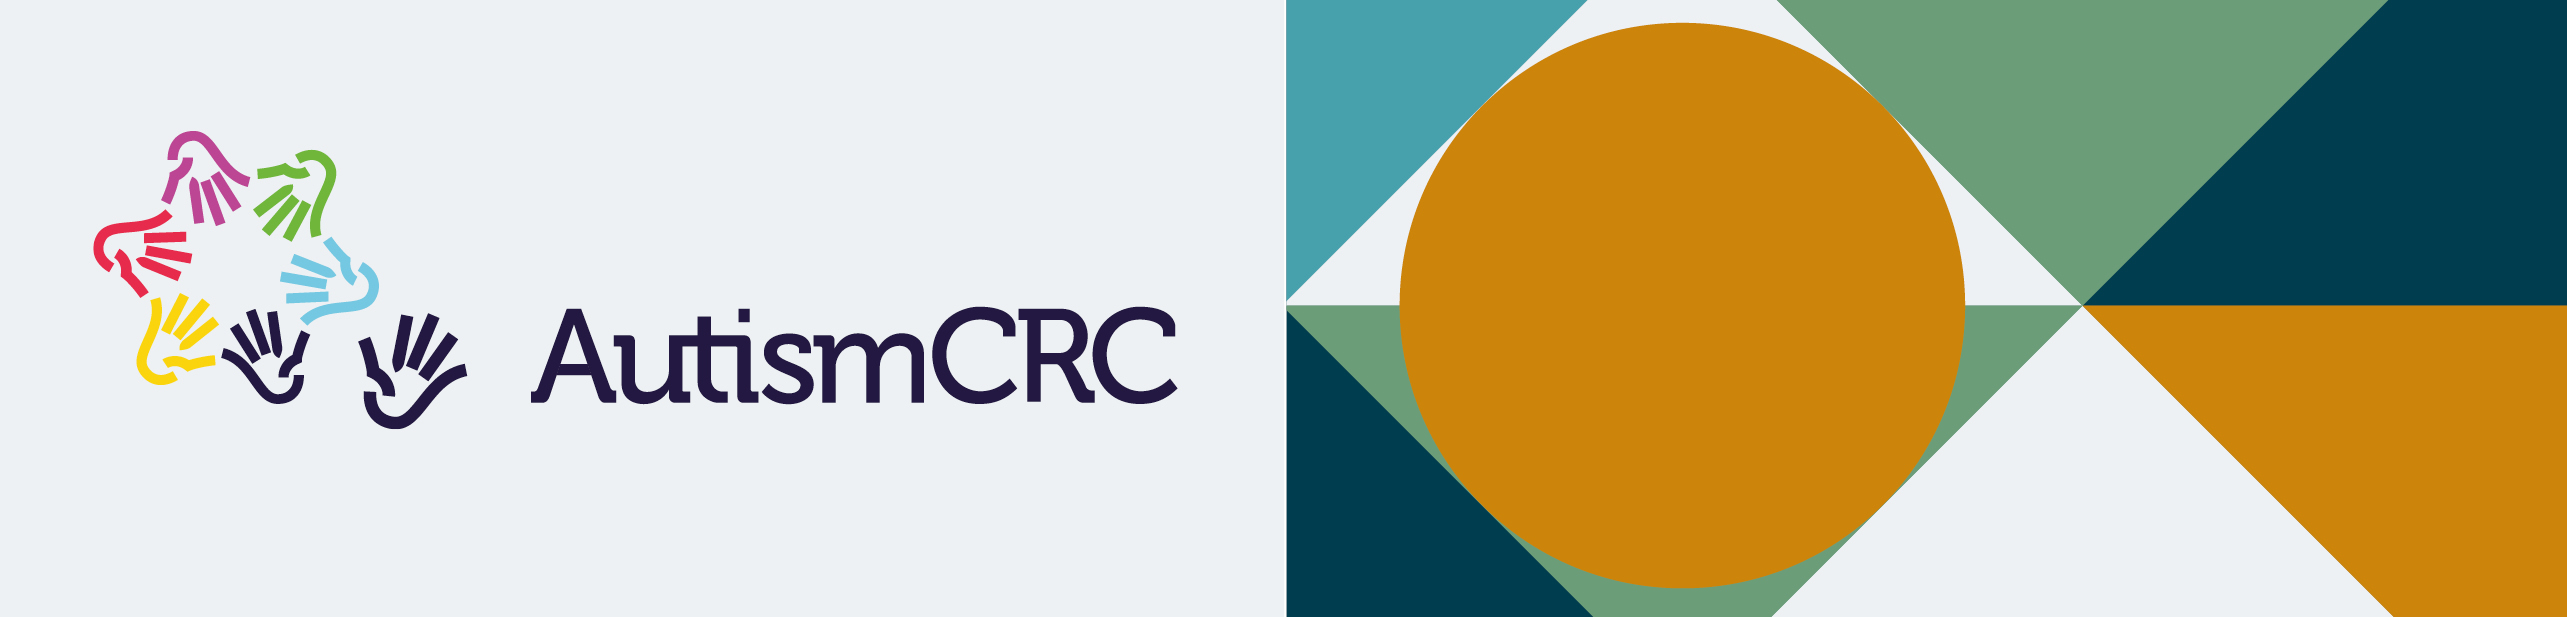 Autism CRC & Vulcan Coalition logos 